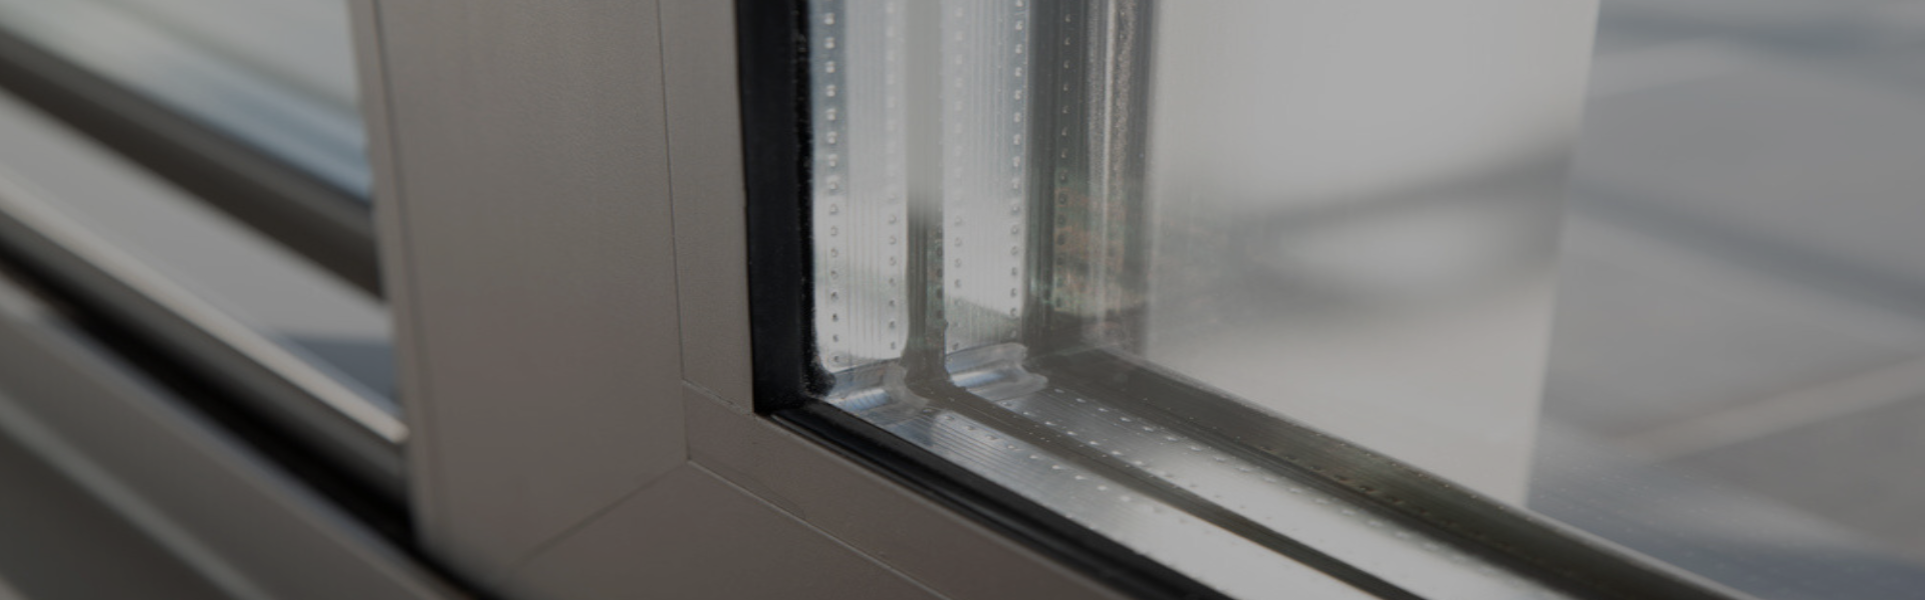 Slider Aluminium Windows, Glaziers in Soho, W1